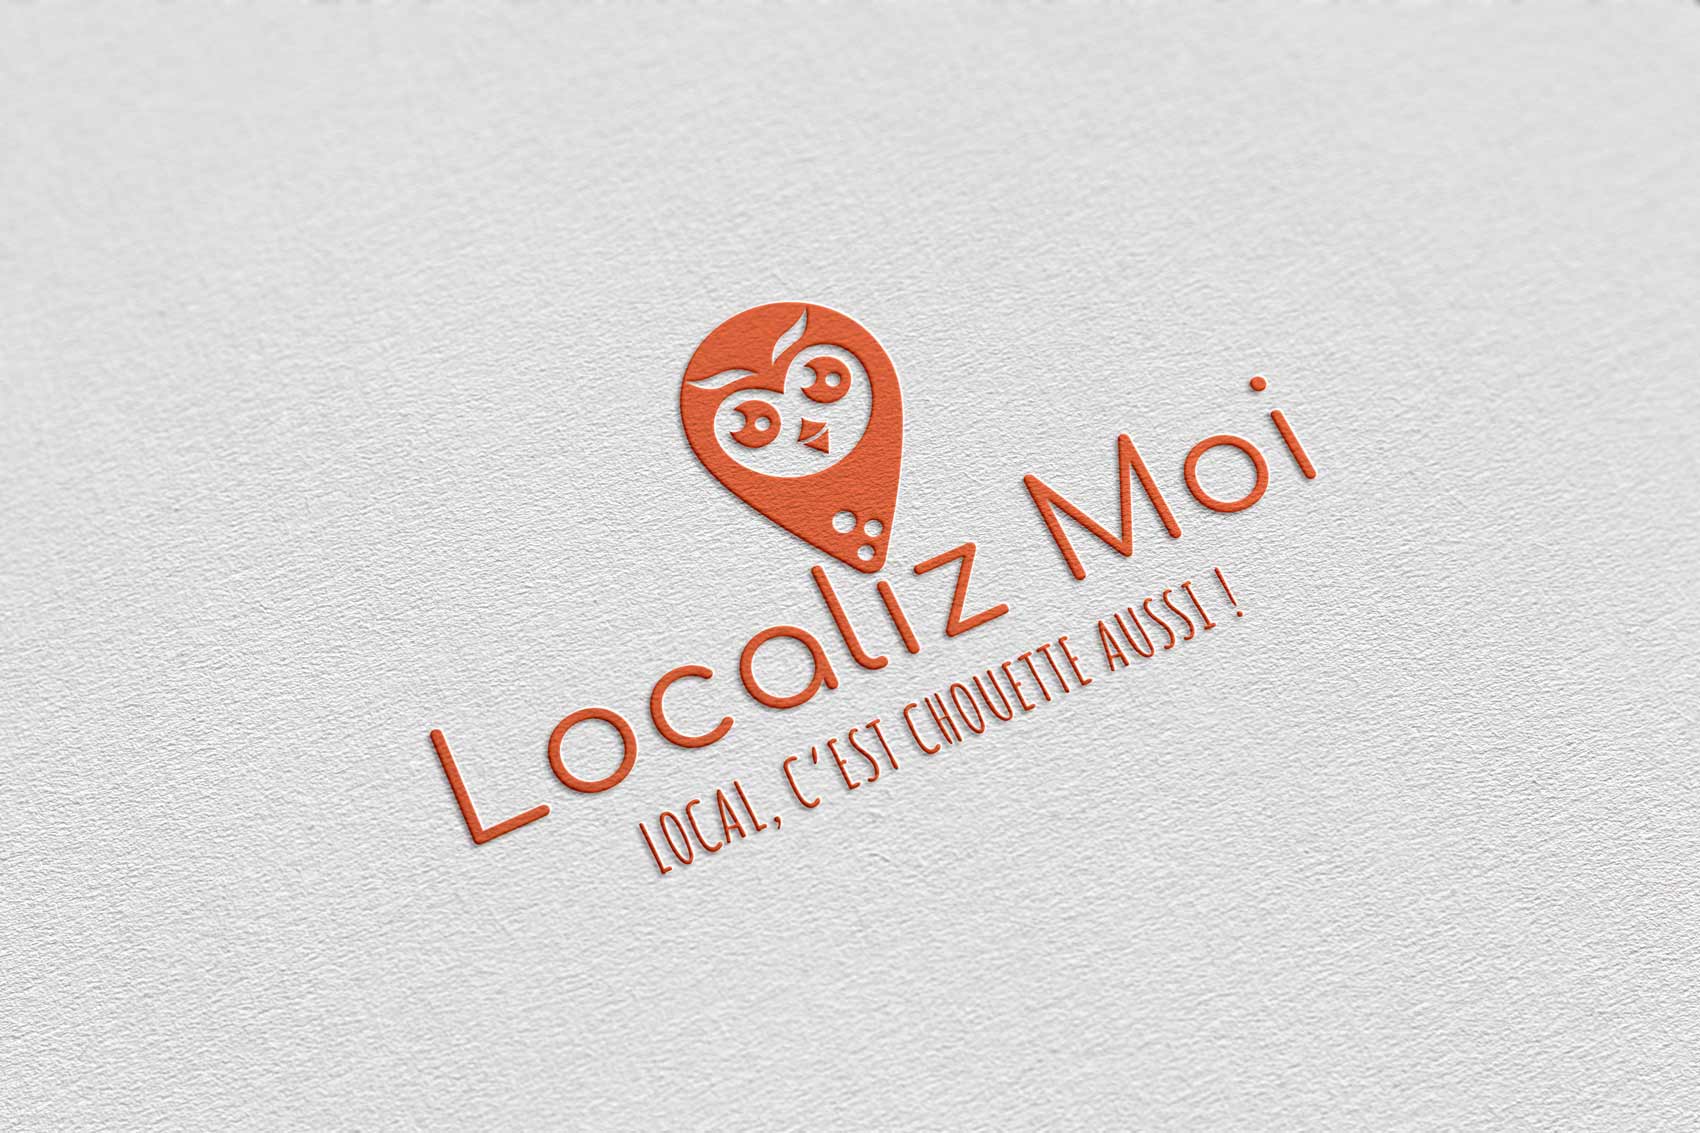 Mockup du logotype Localiz Moi